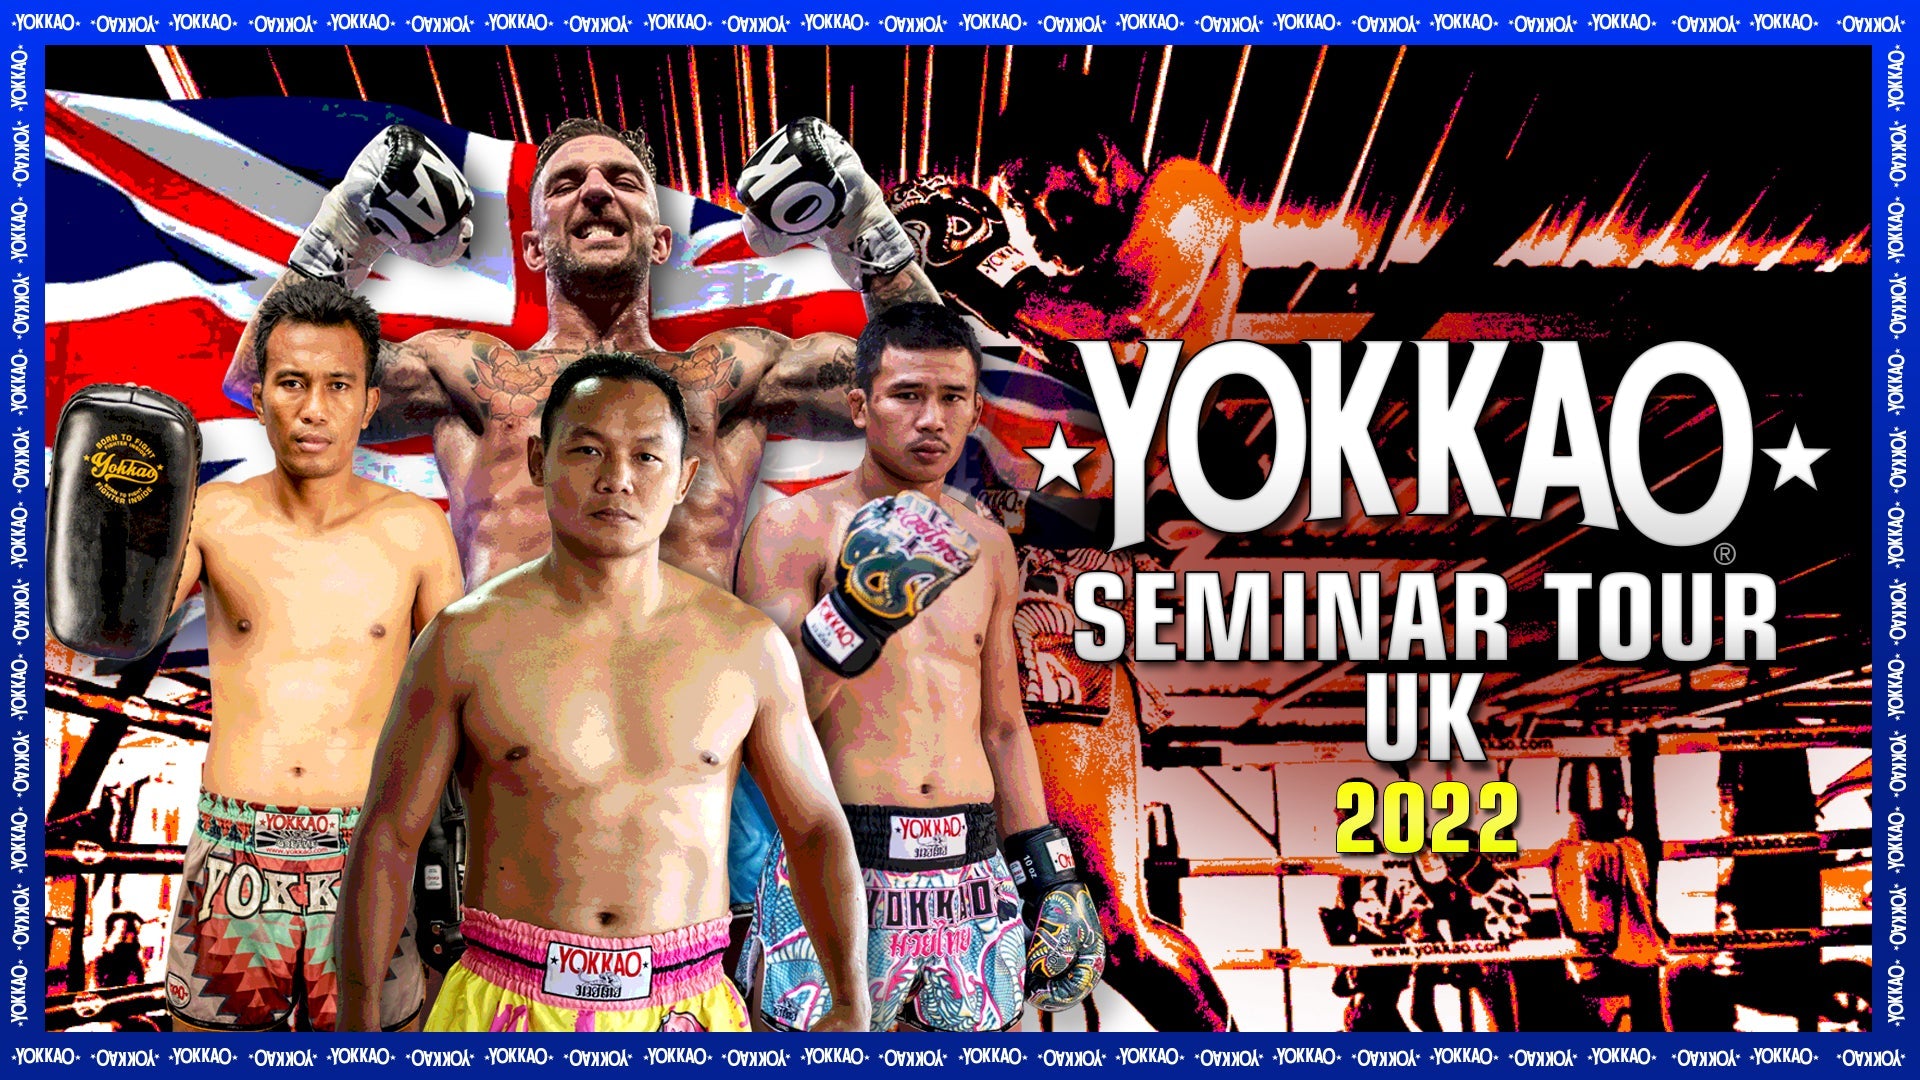 YOKKAO Announces Summer 2022 UK Seminar Tour